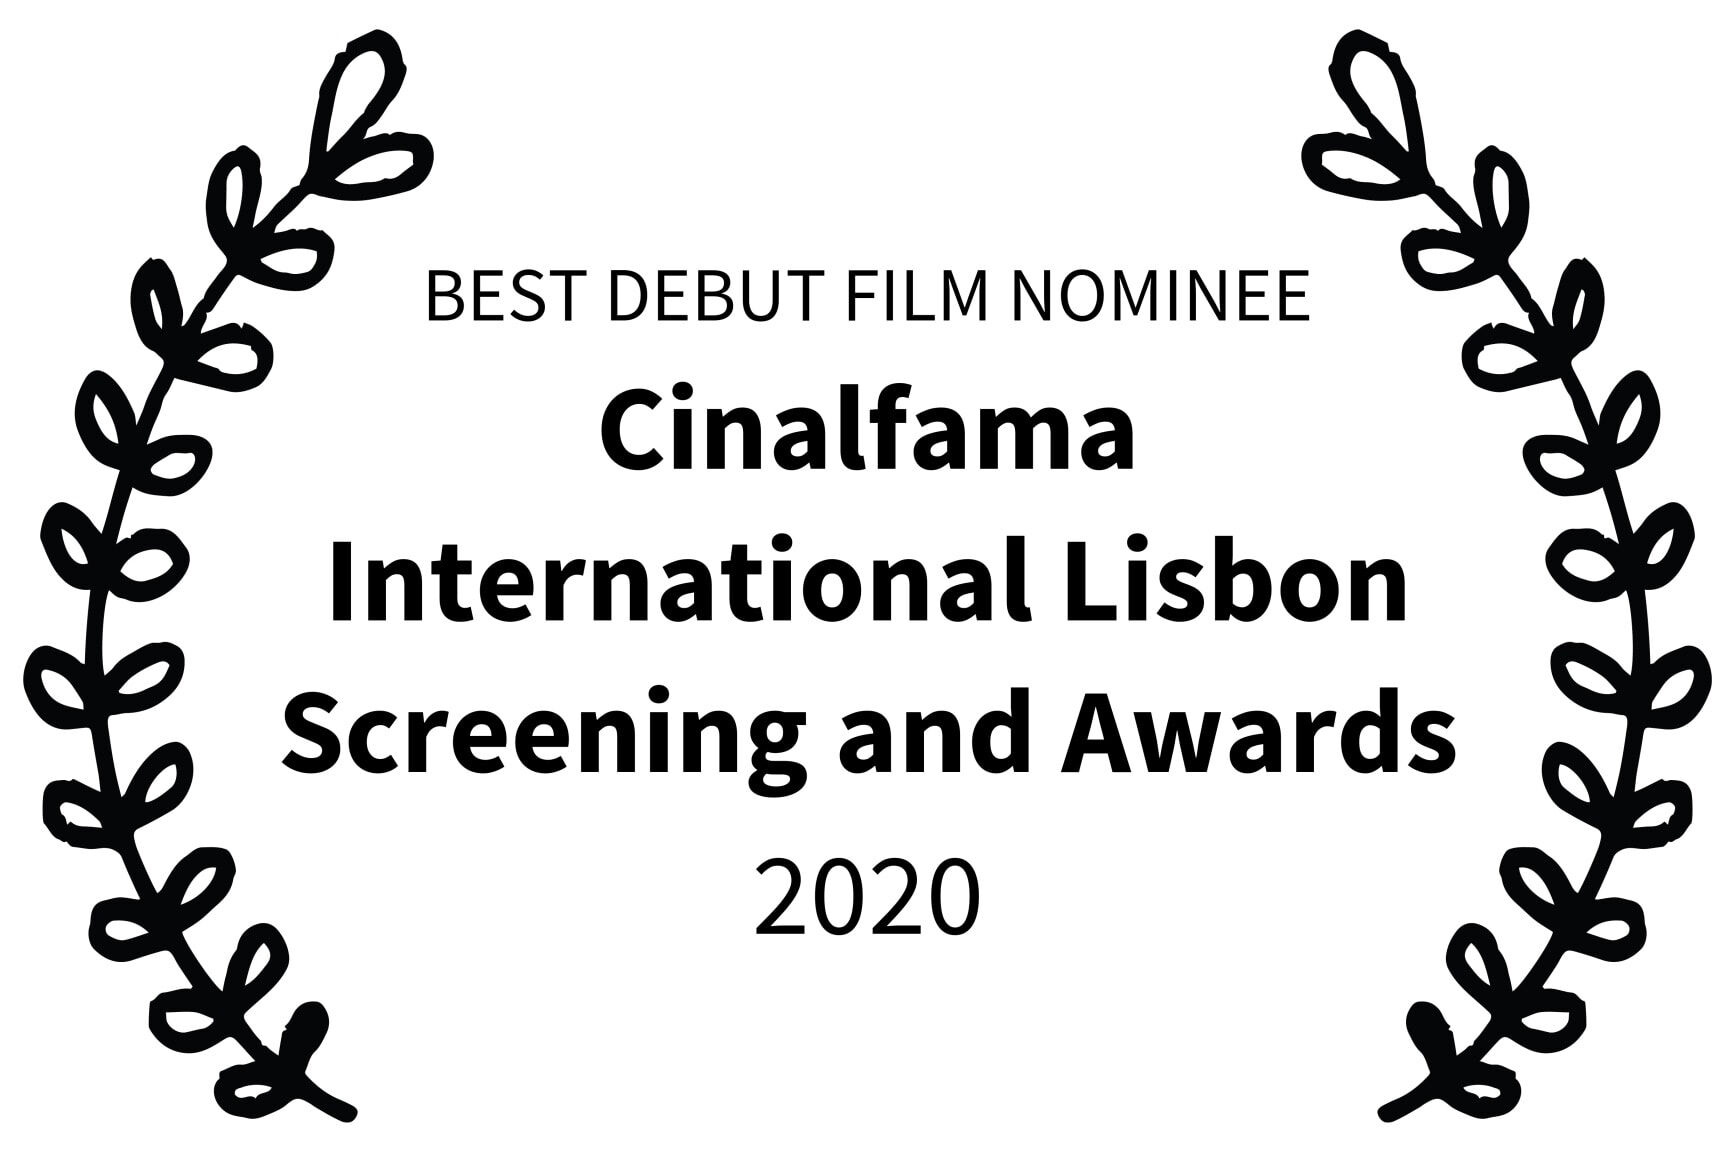 BEST DEBUT FILM NOMINEE - Cinalfama International Lisbon Screening and Awards - 2020